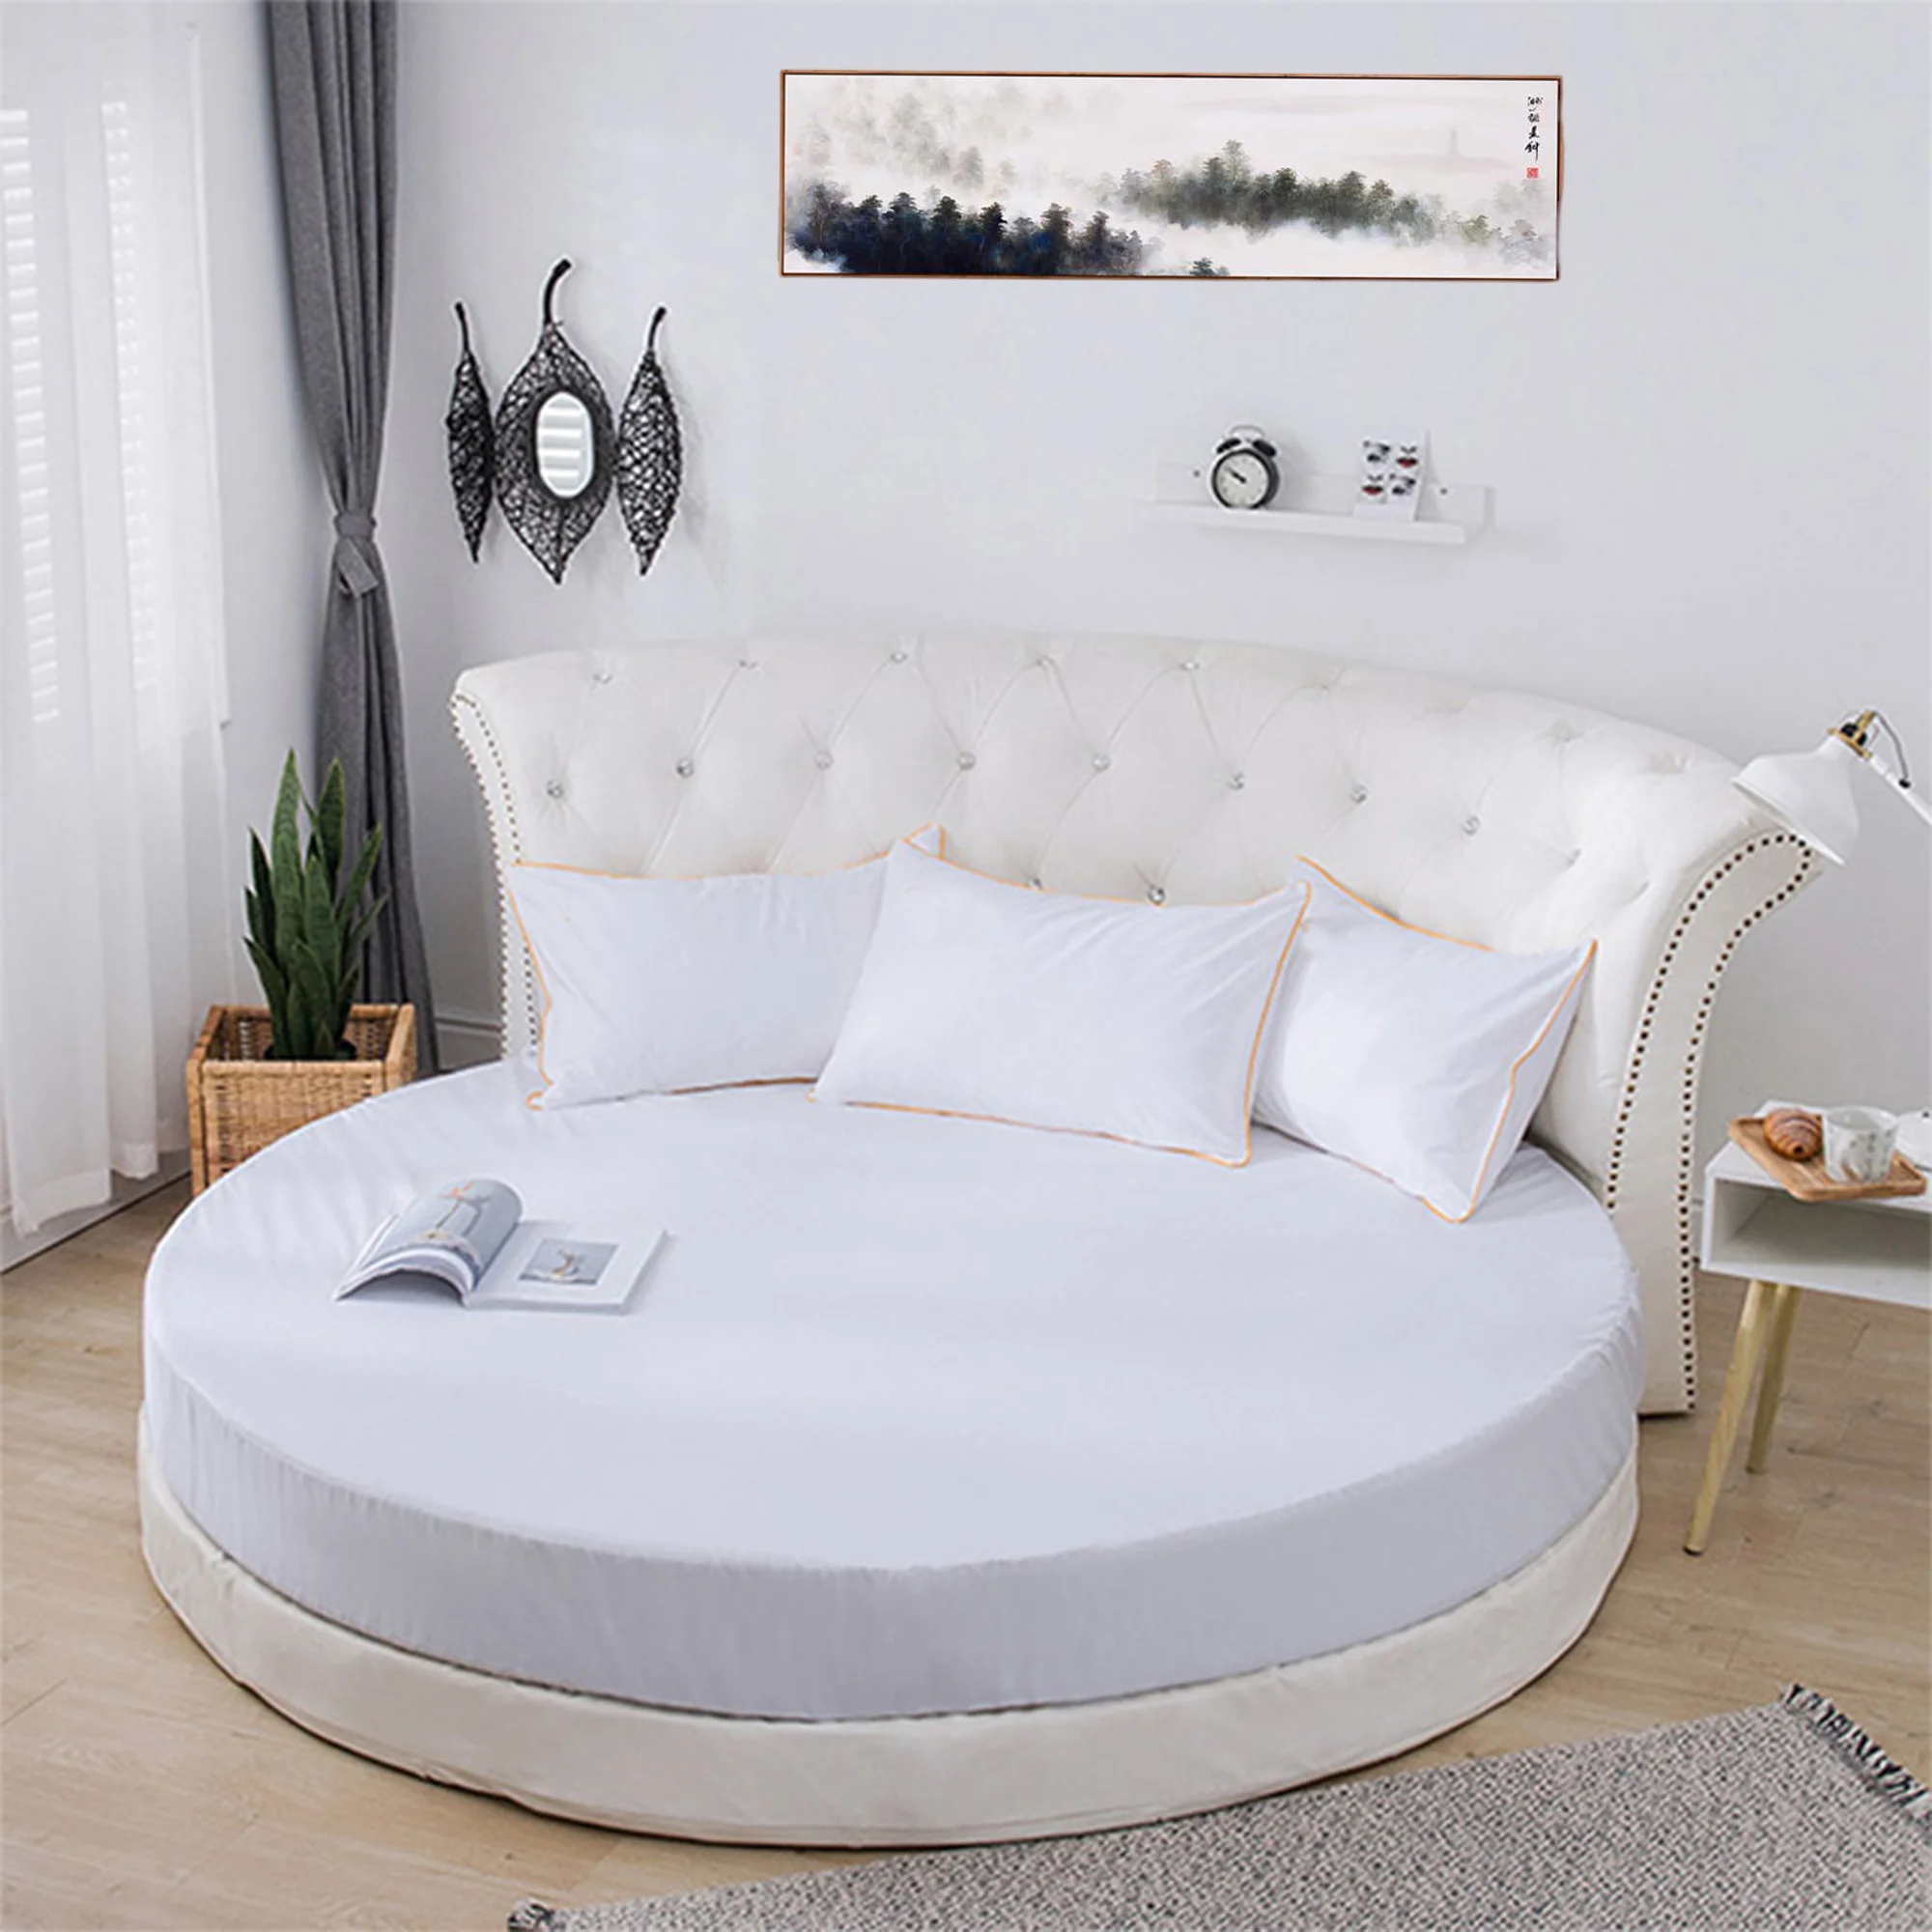 Cheap Pillow Top King Sizes Round Beds Mattresses Memory Foam Double Bed Sleeping Bonnell Spring Mattress